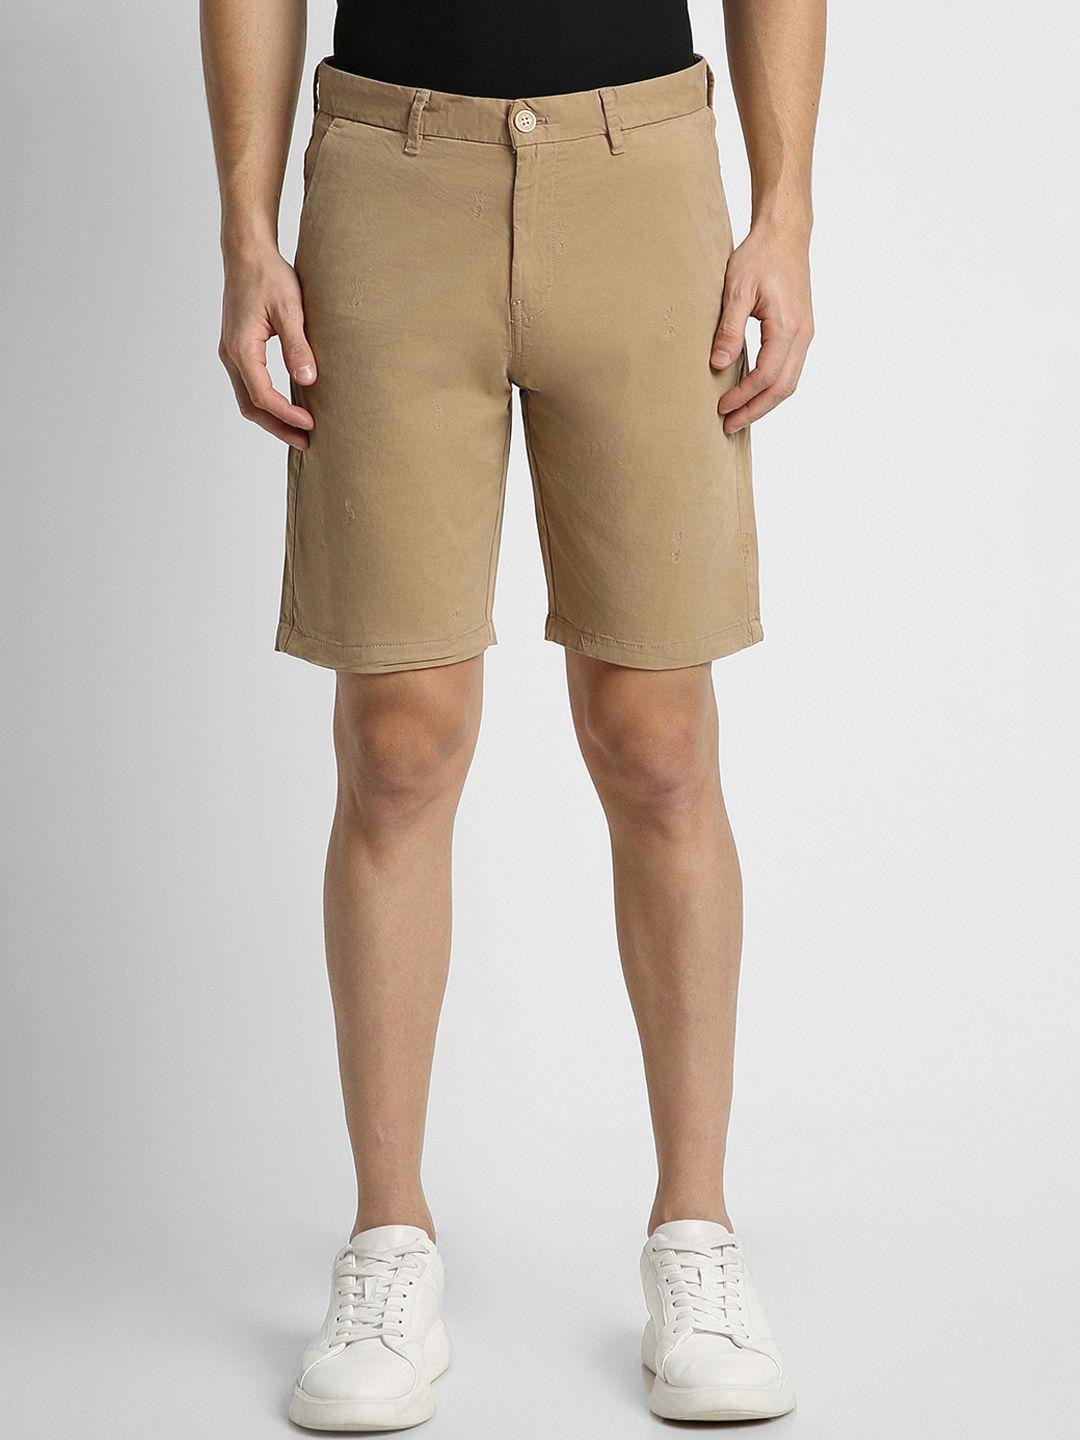 peter-england-casuals-men-mid-rise-regular-shorts